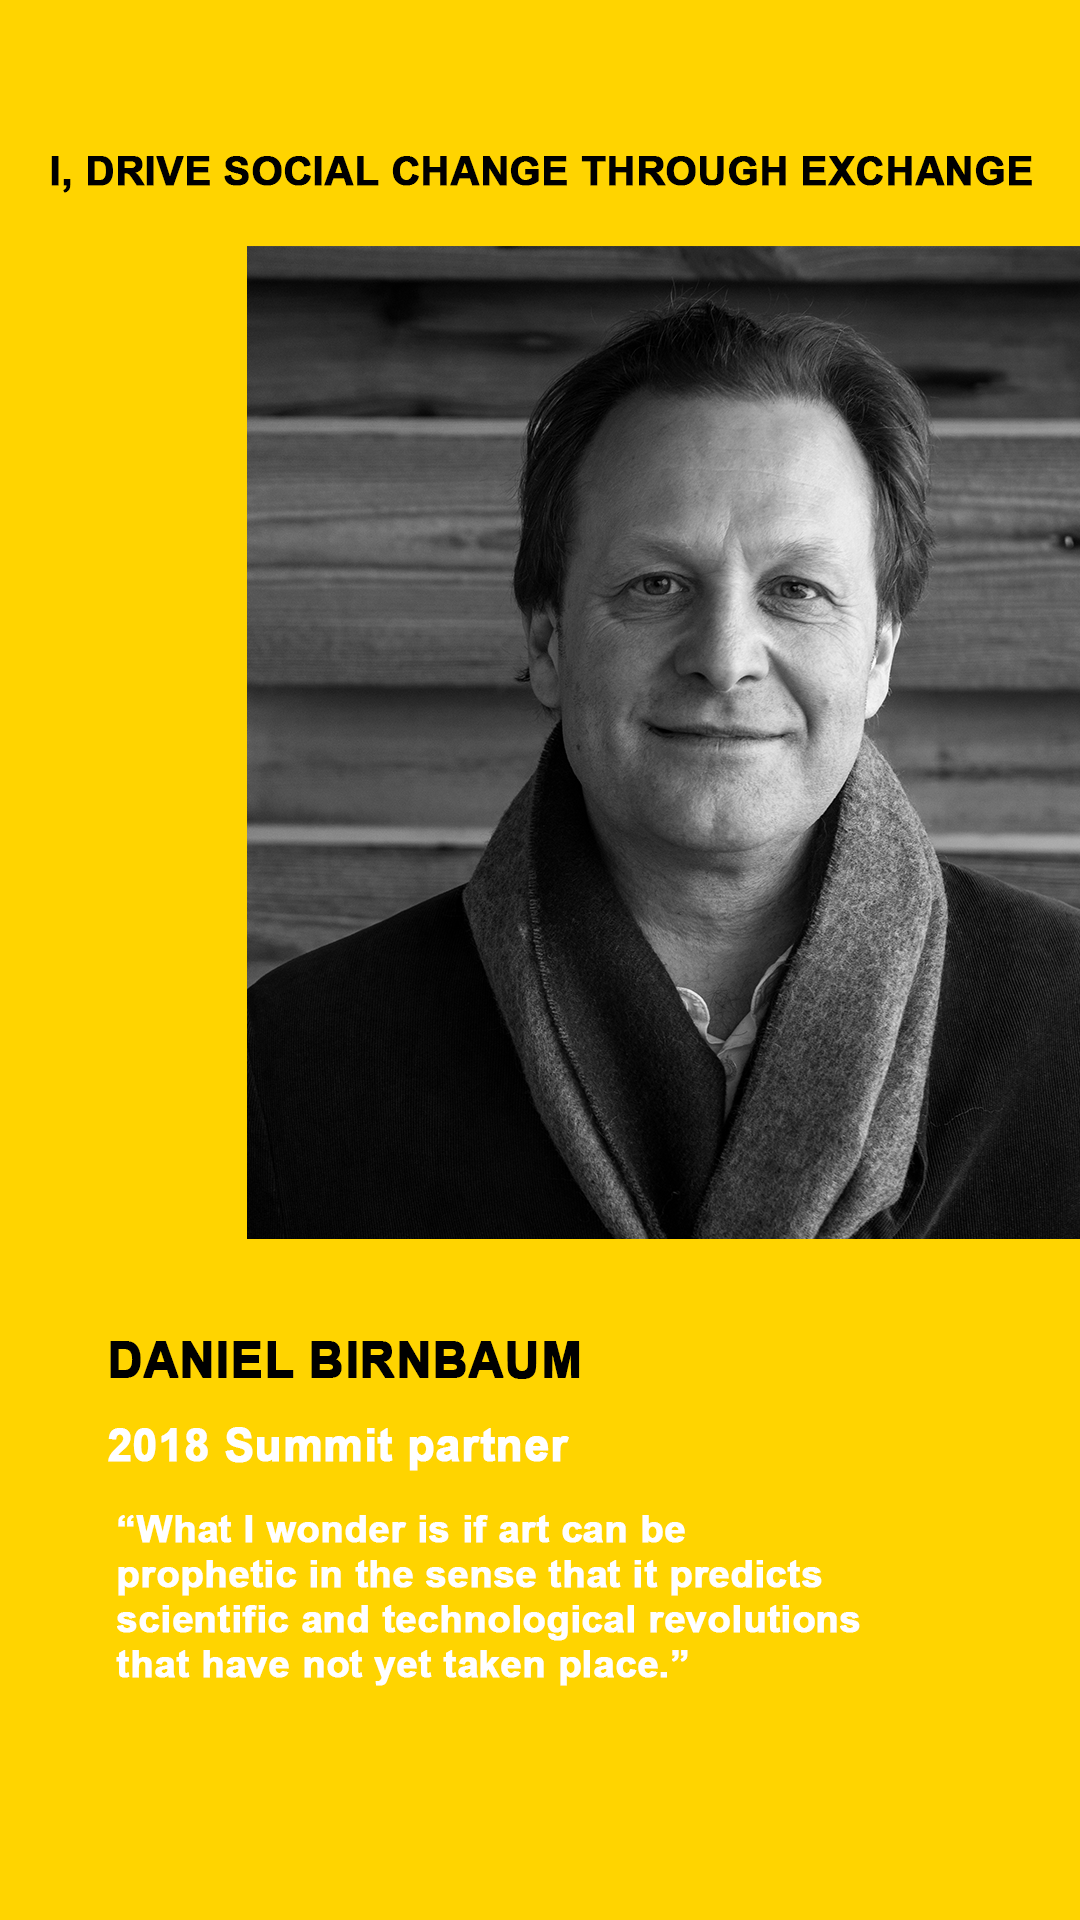 Daniel-Birnbaum